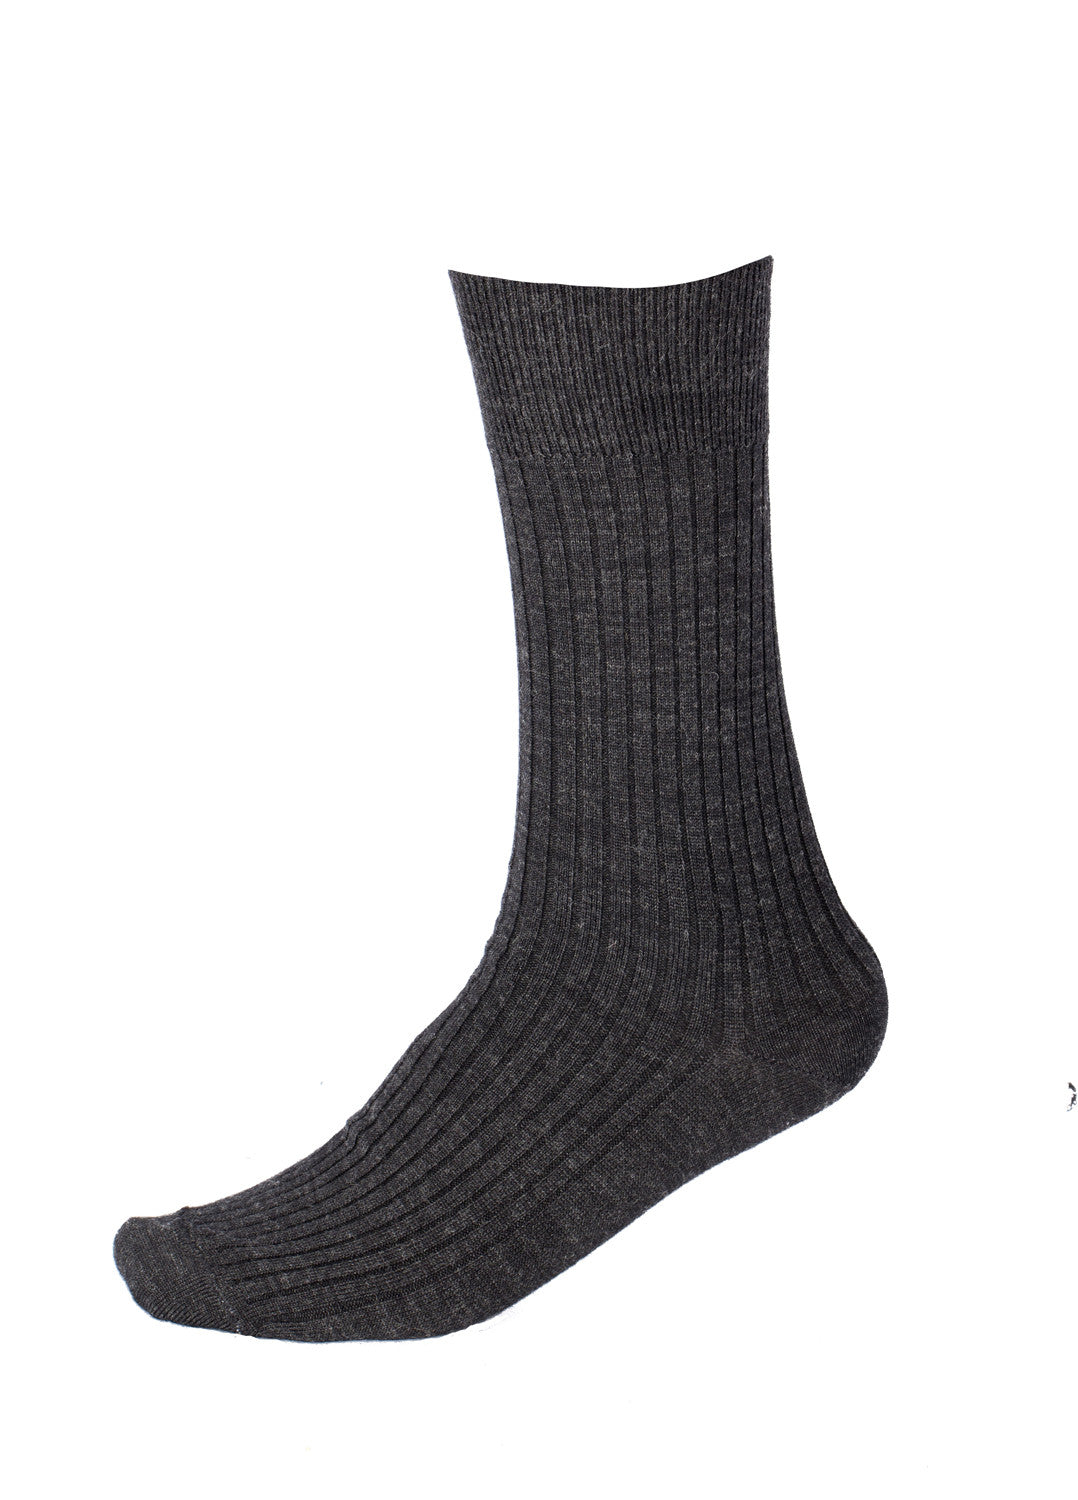 Injinji Toe Socks - Liner, Crew, Merino Wool - Slate – Health